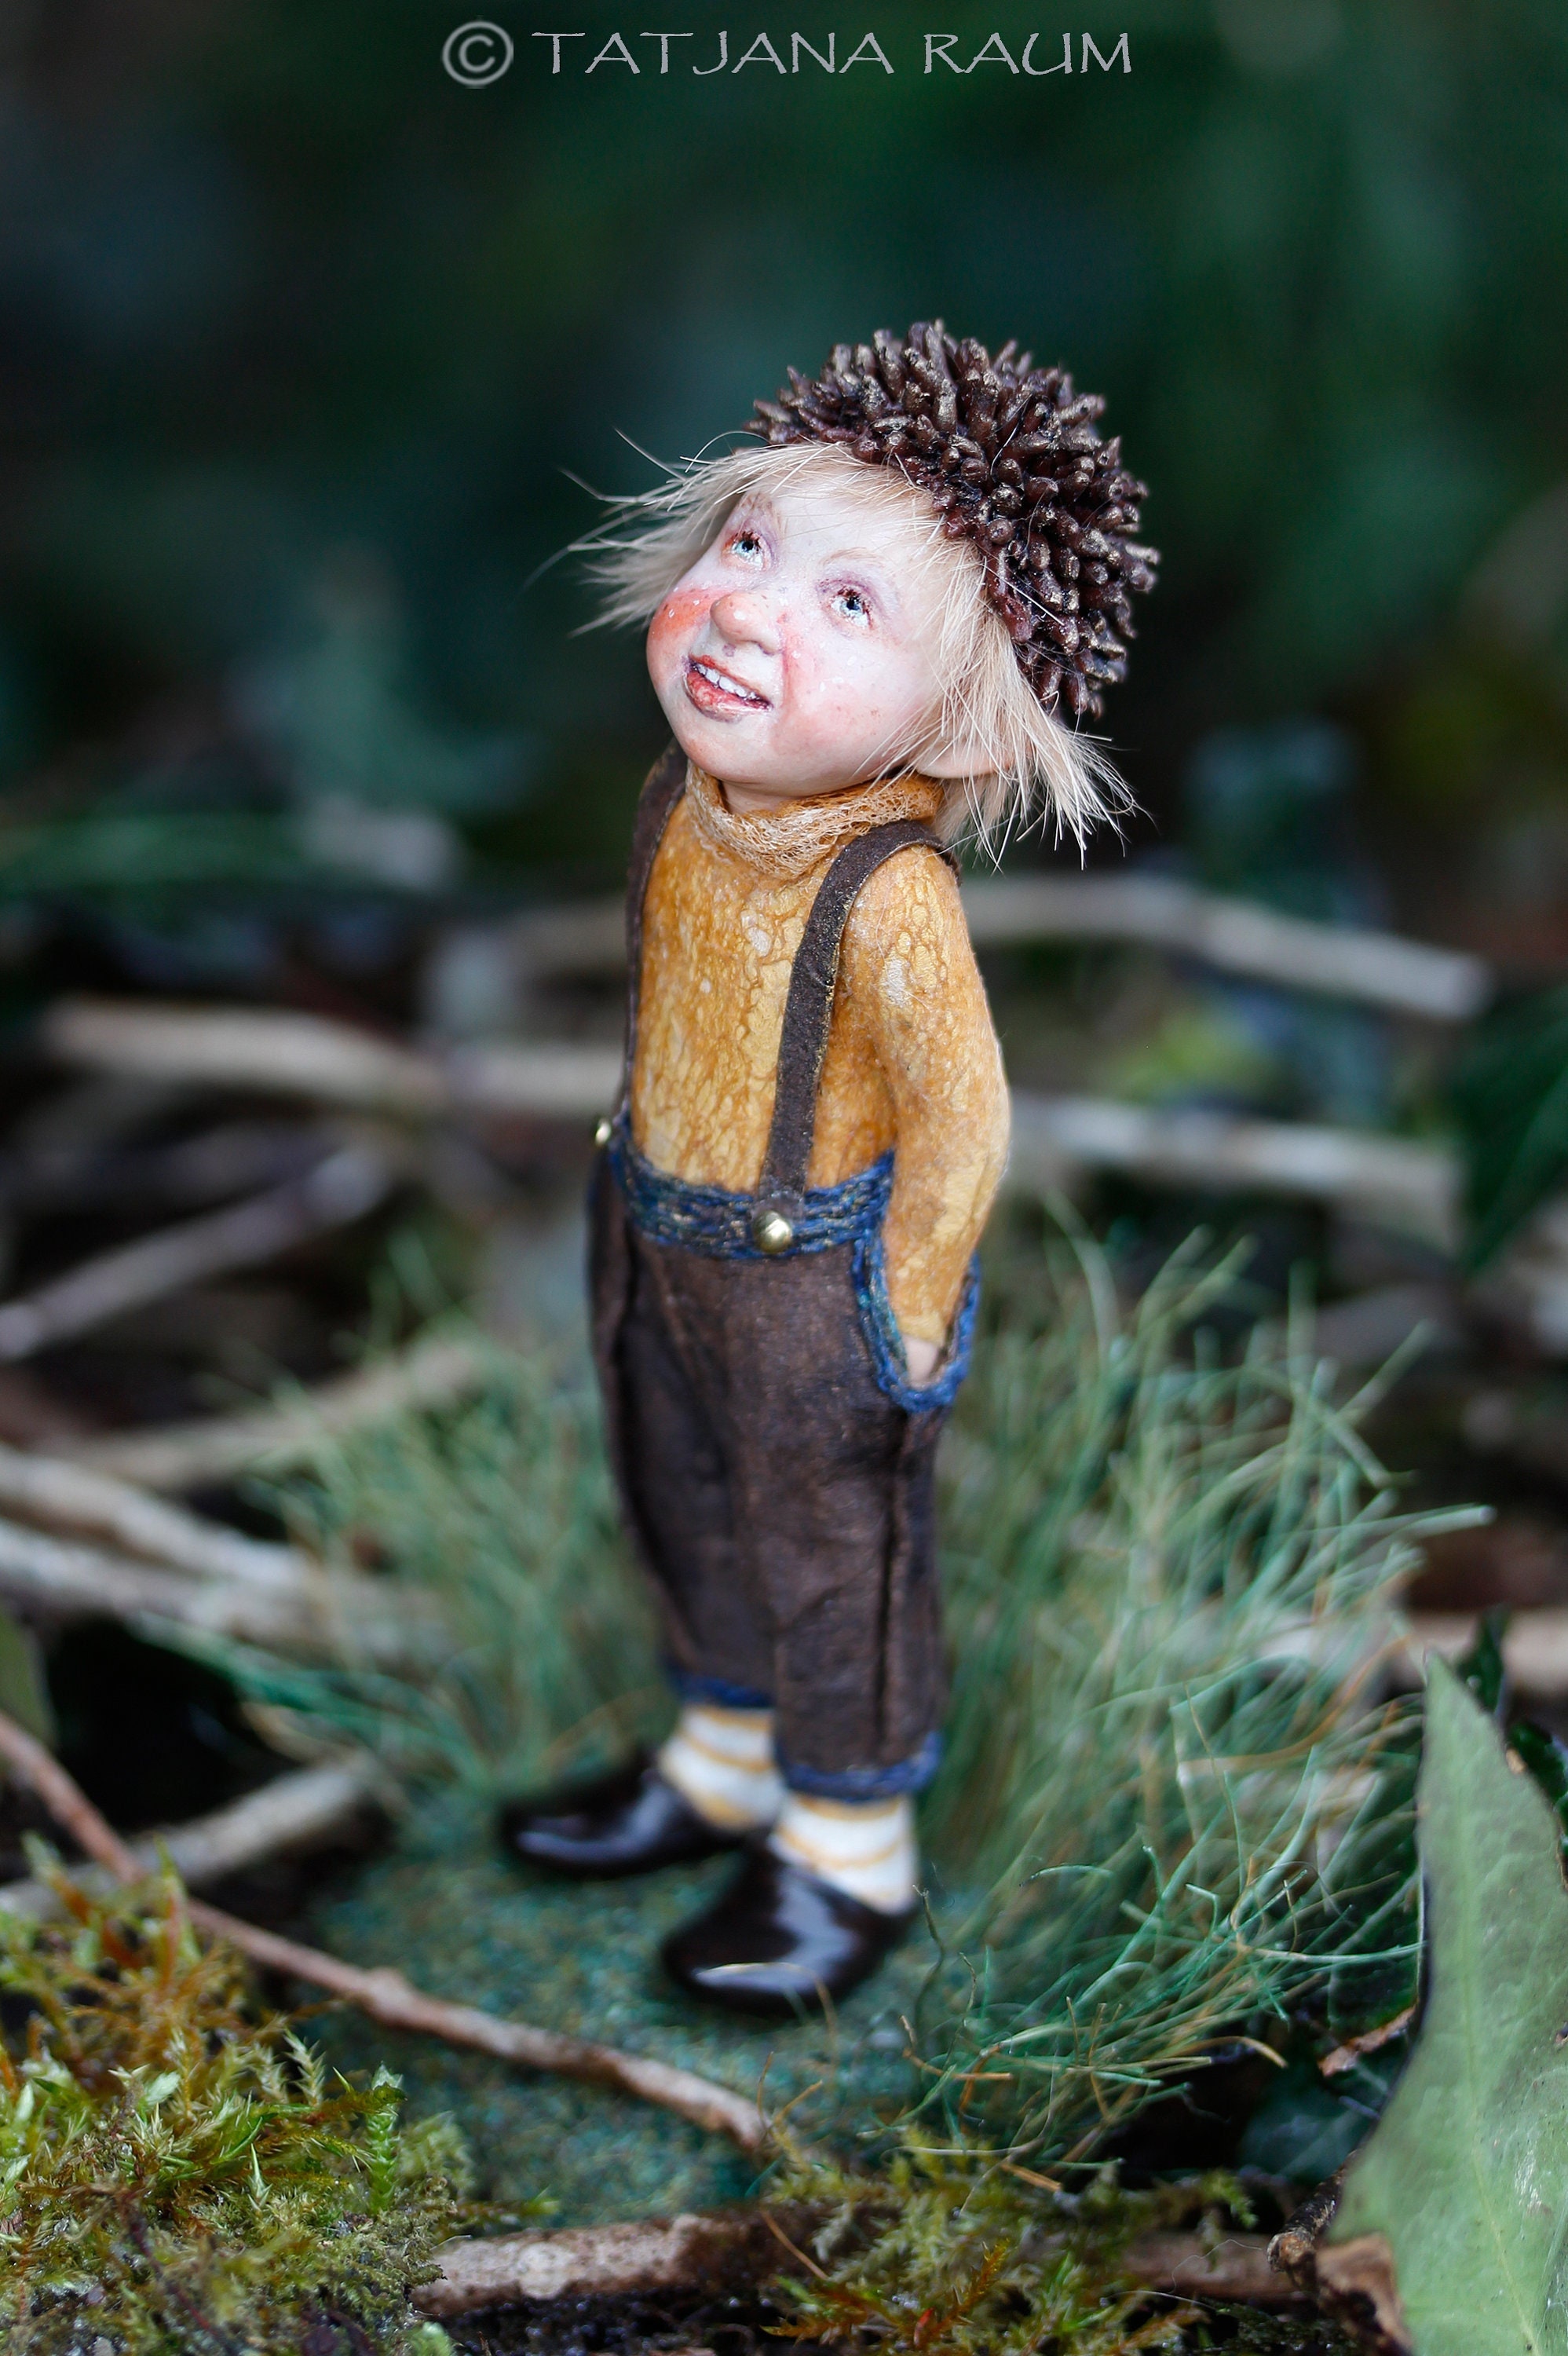 Little Pixie Boy Fairies Miniature Figurines Sculpture 